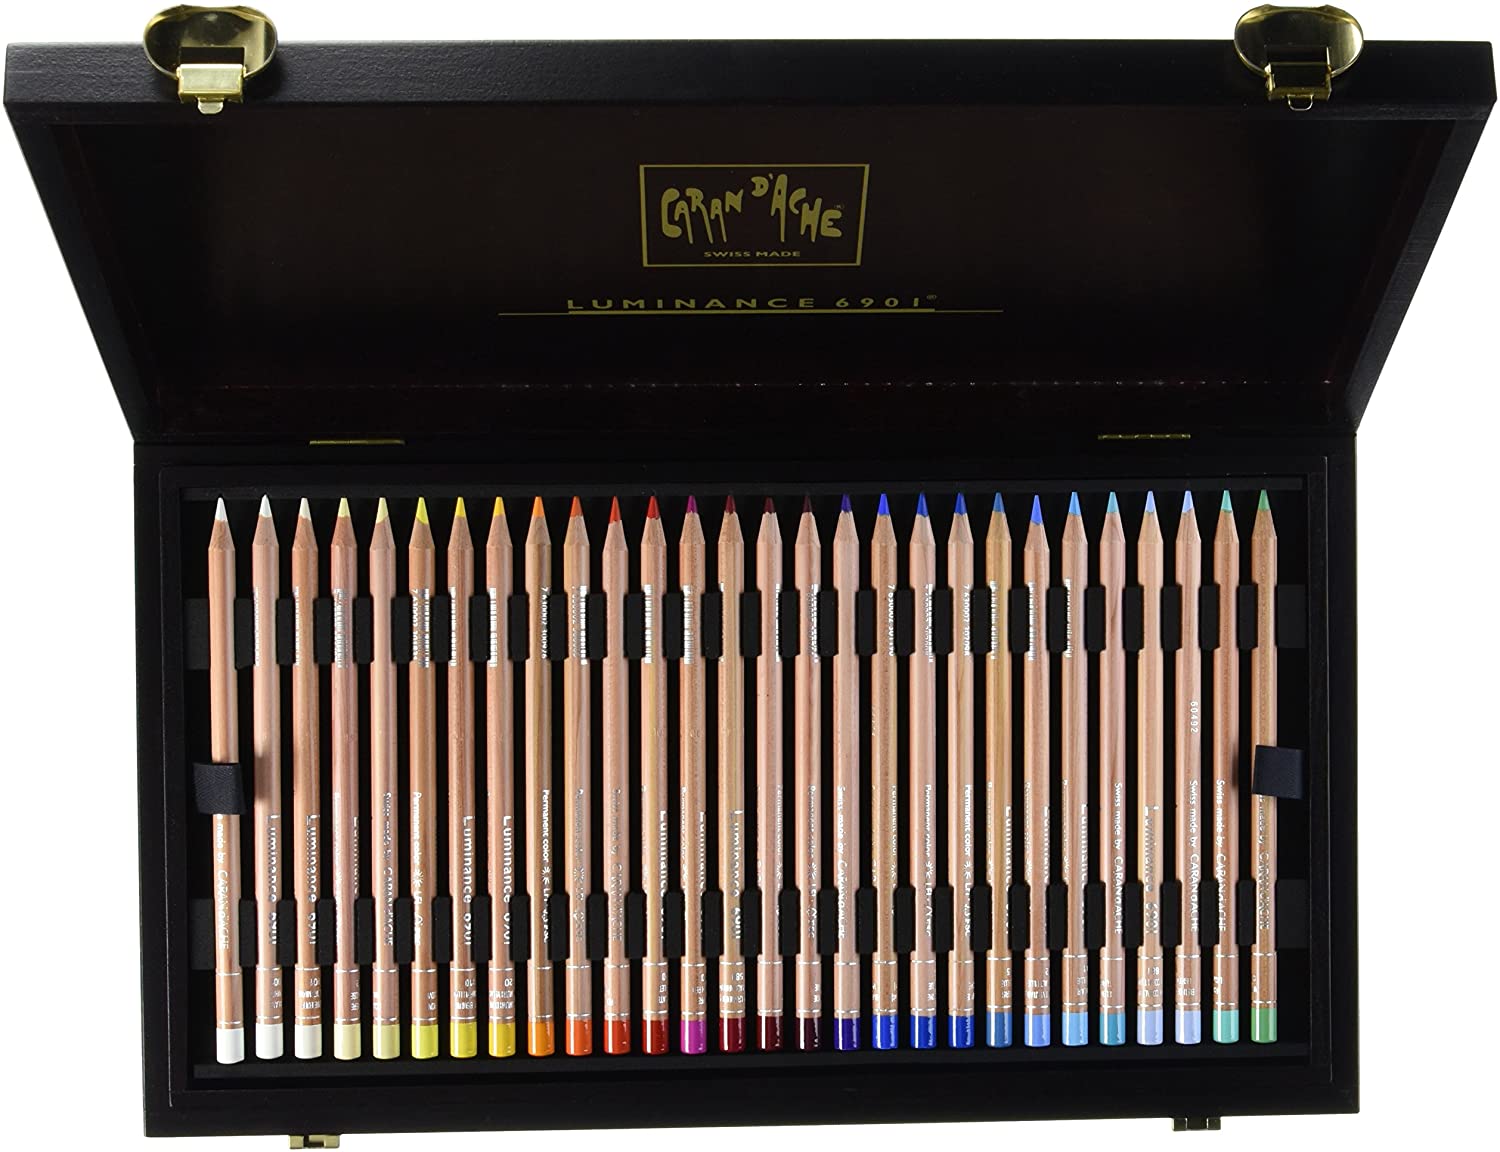 Caran D'ache Luminance Colored Pencils open case